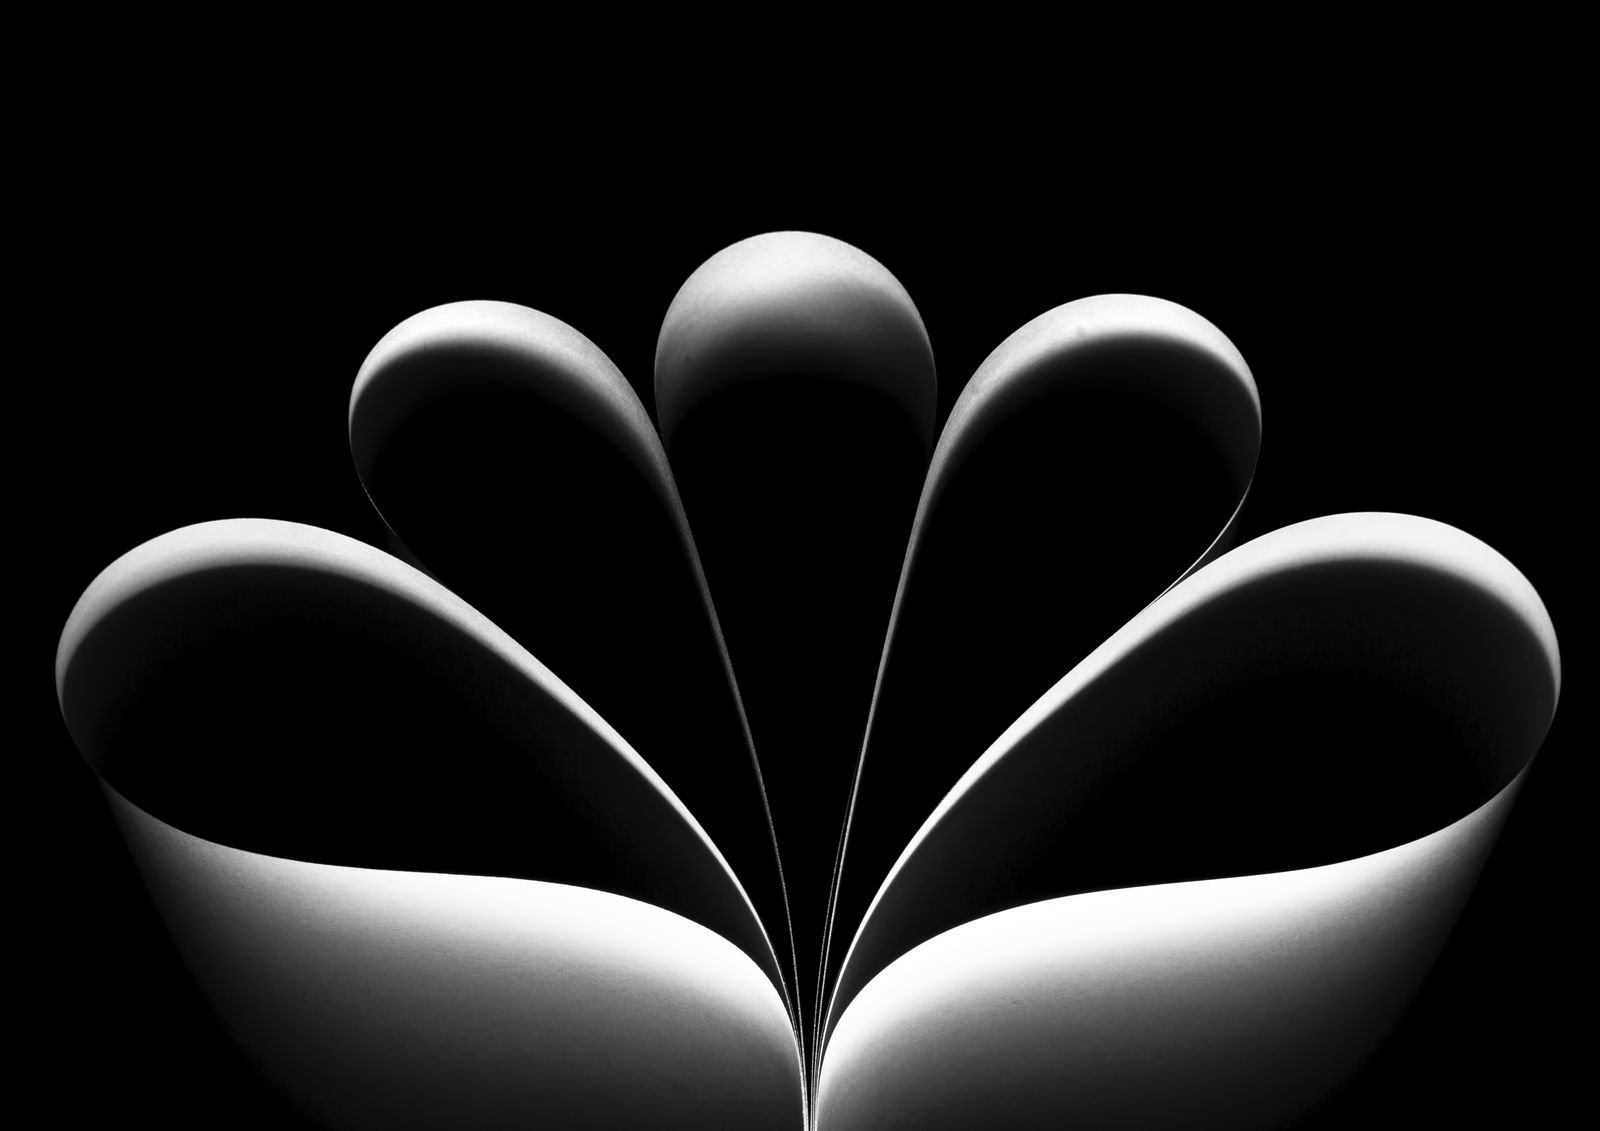 Abstract, Black & white, Jozef kiss, Jozefkiss.com, Symmetry, Jozef Kiss